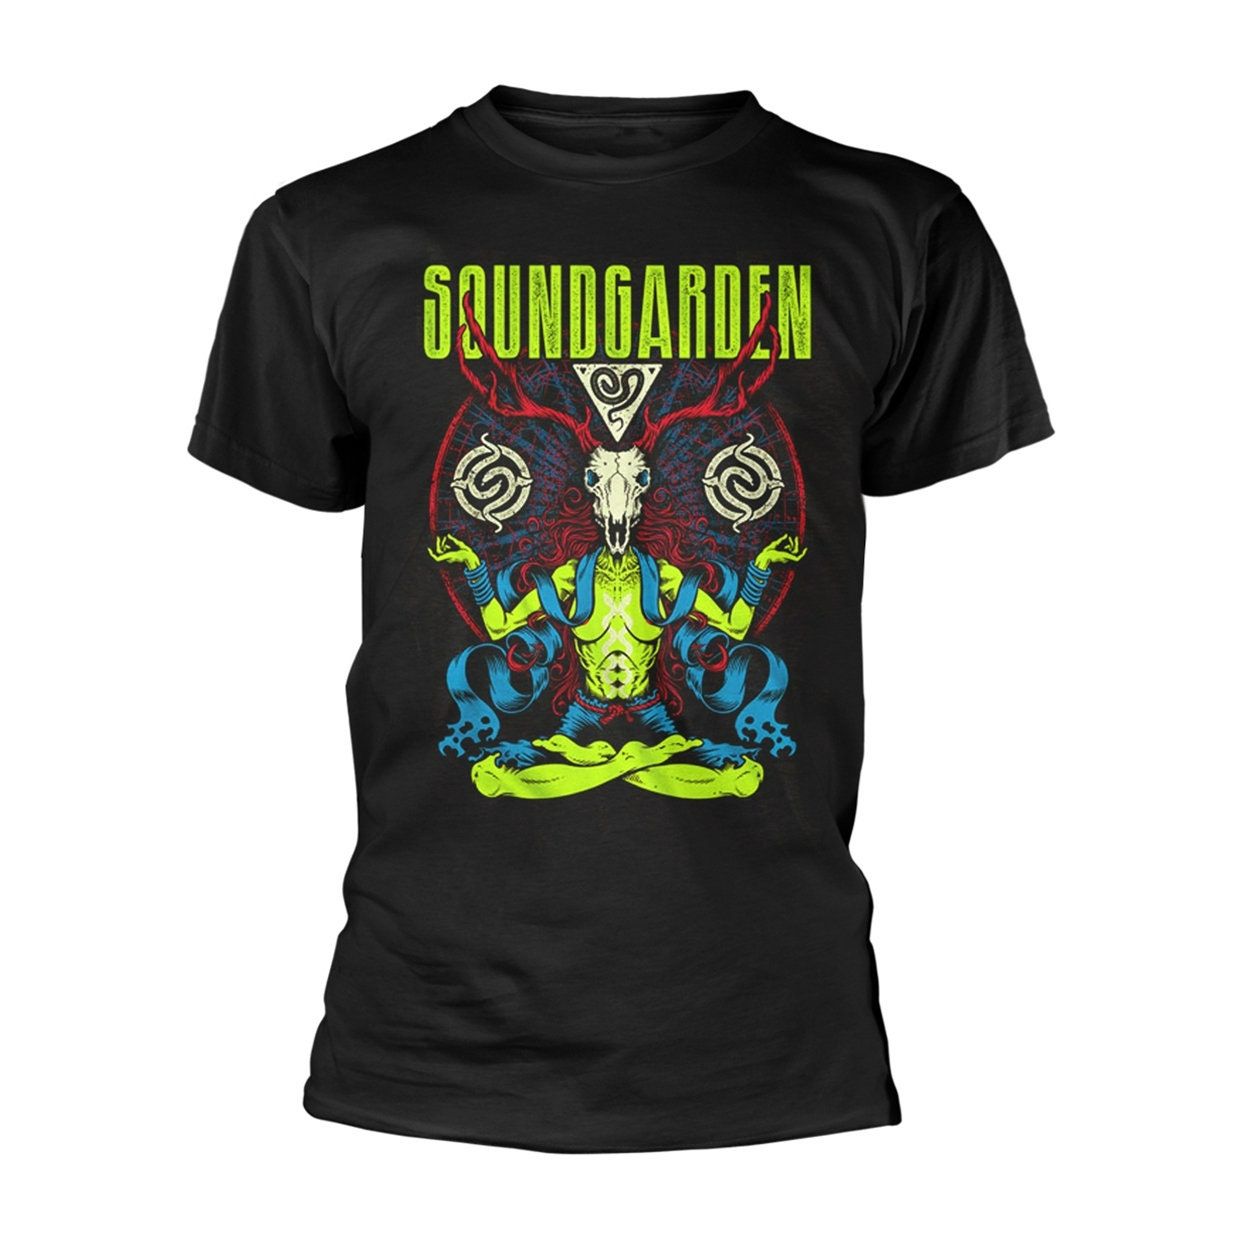 Soundgarden Neon Badmotorfinger Chris Cornell Official Tee T-Shirt